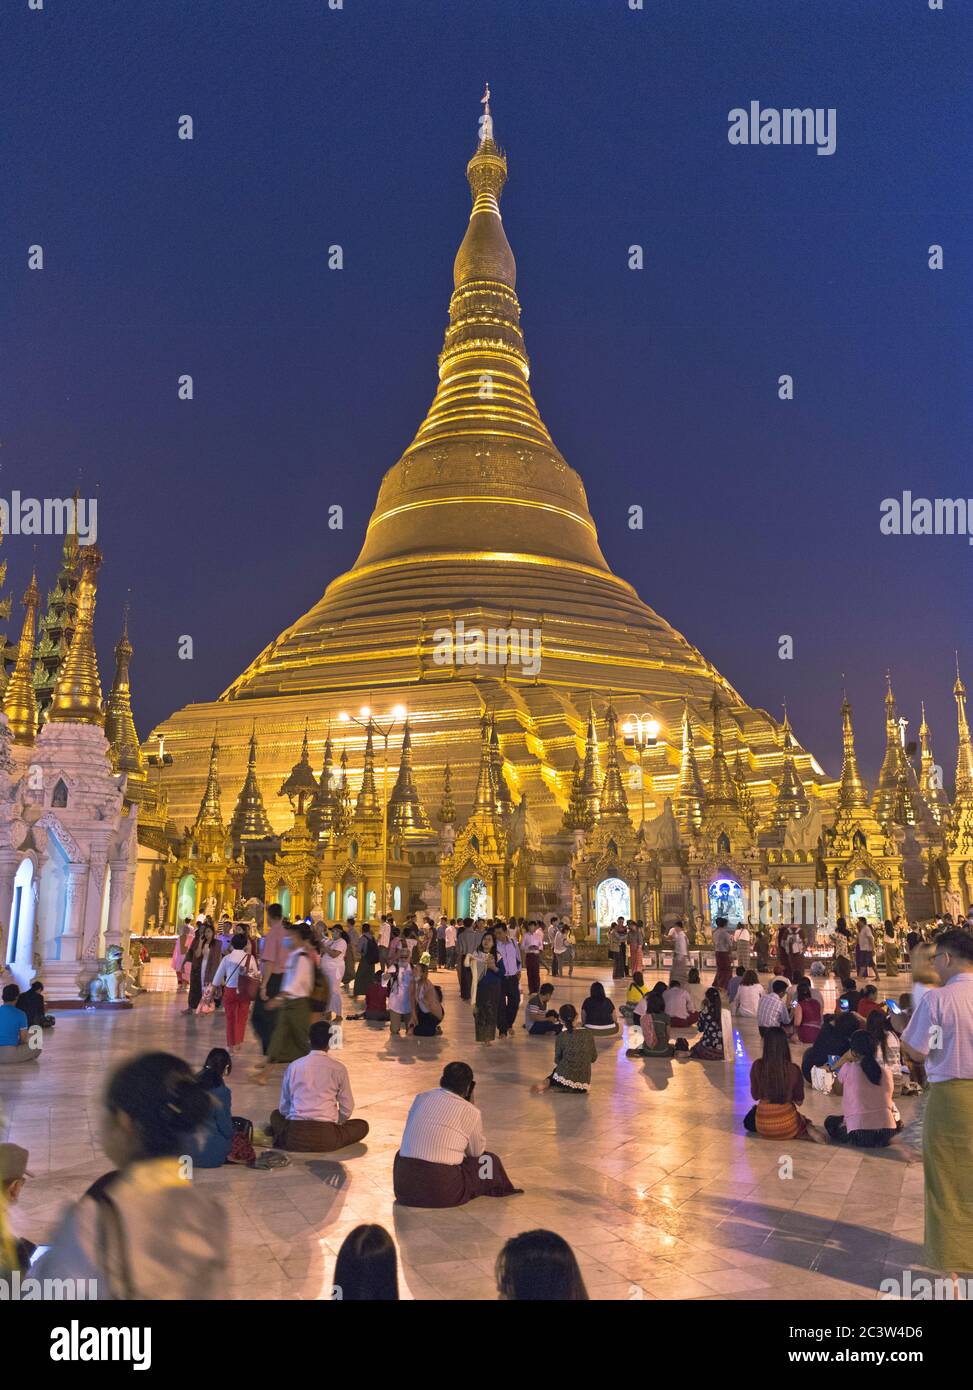 dh Shwedagon Pagoda templo YANGON MYANMAR pueblo birmano templos budistas Noche Gran Dagón Zedi Daw estupa dorada hoja de oro Foto de stock